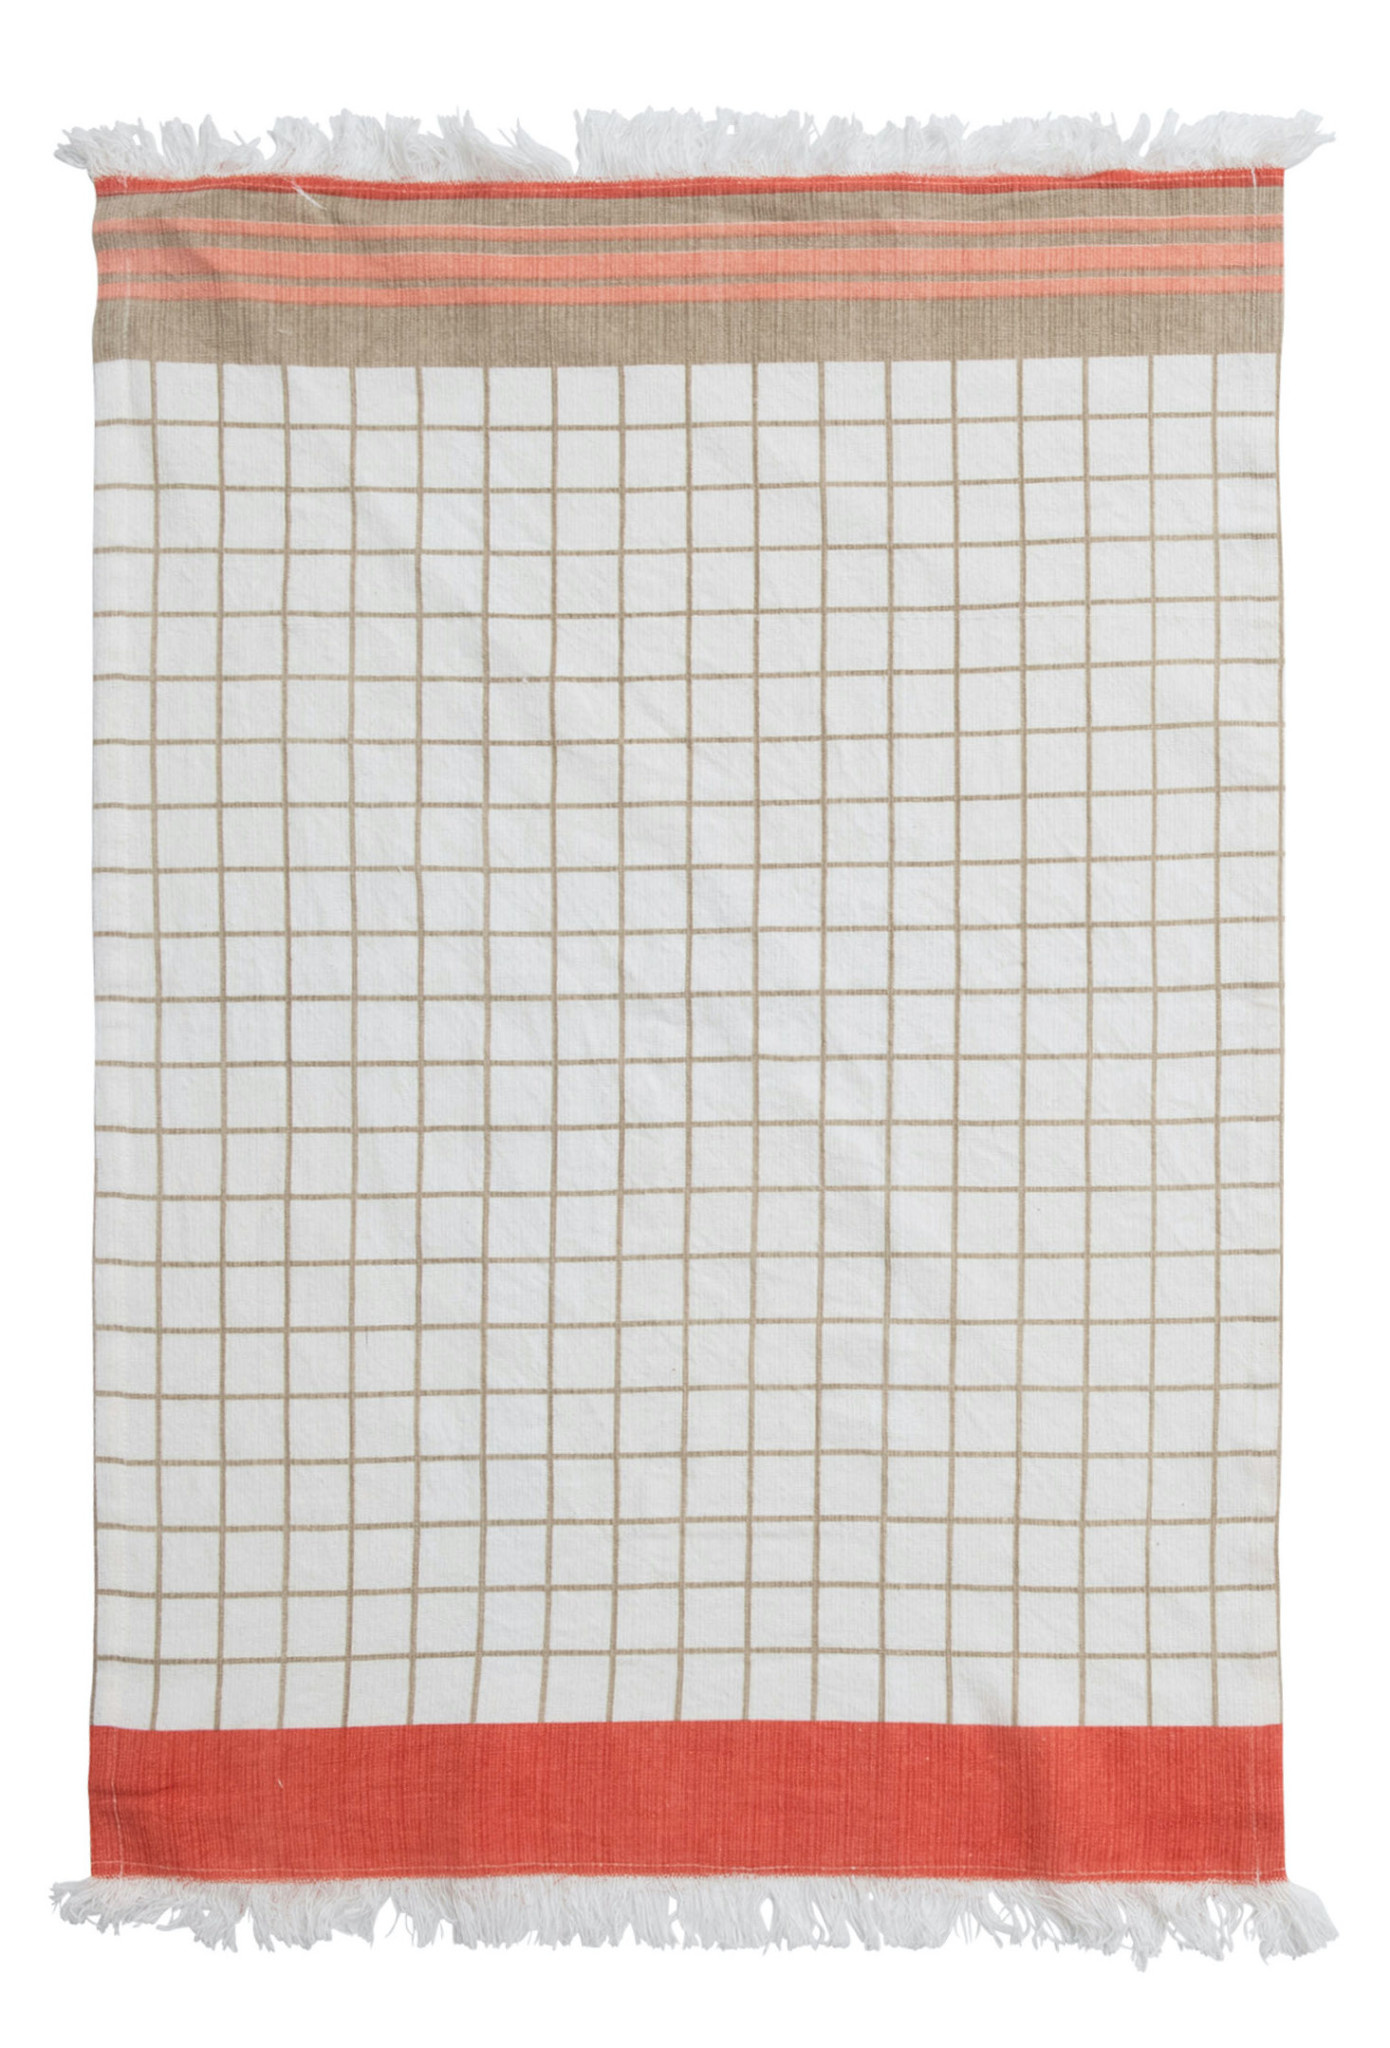 available at m. lynne designs Coral & Tan Geometric Tea Towel